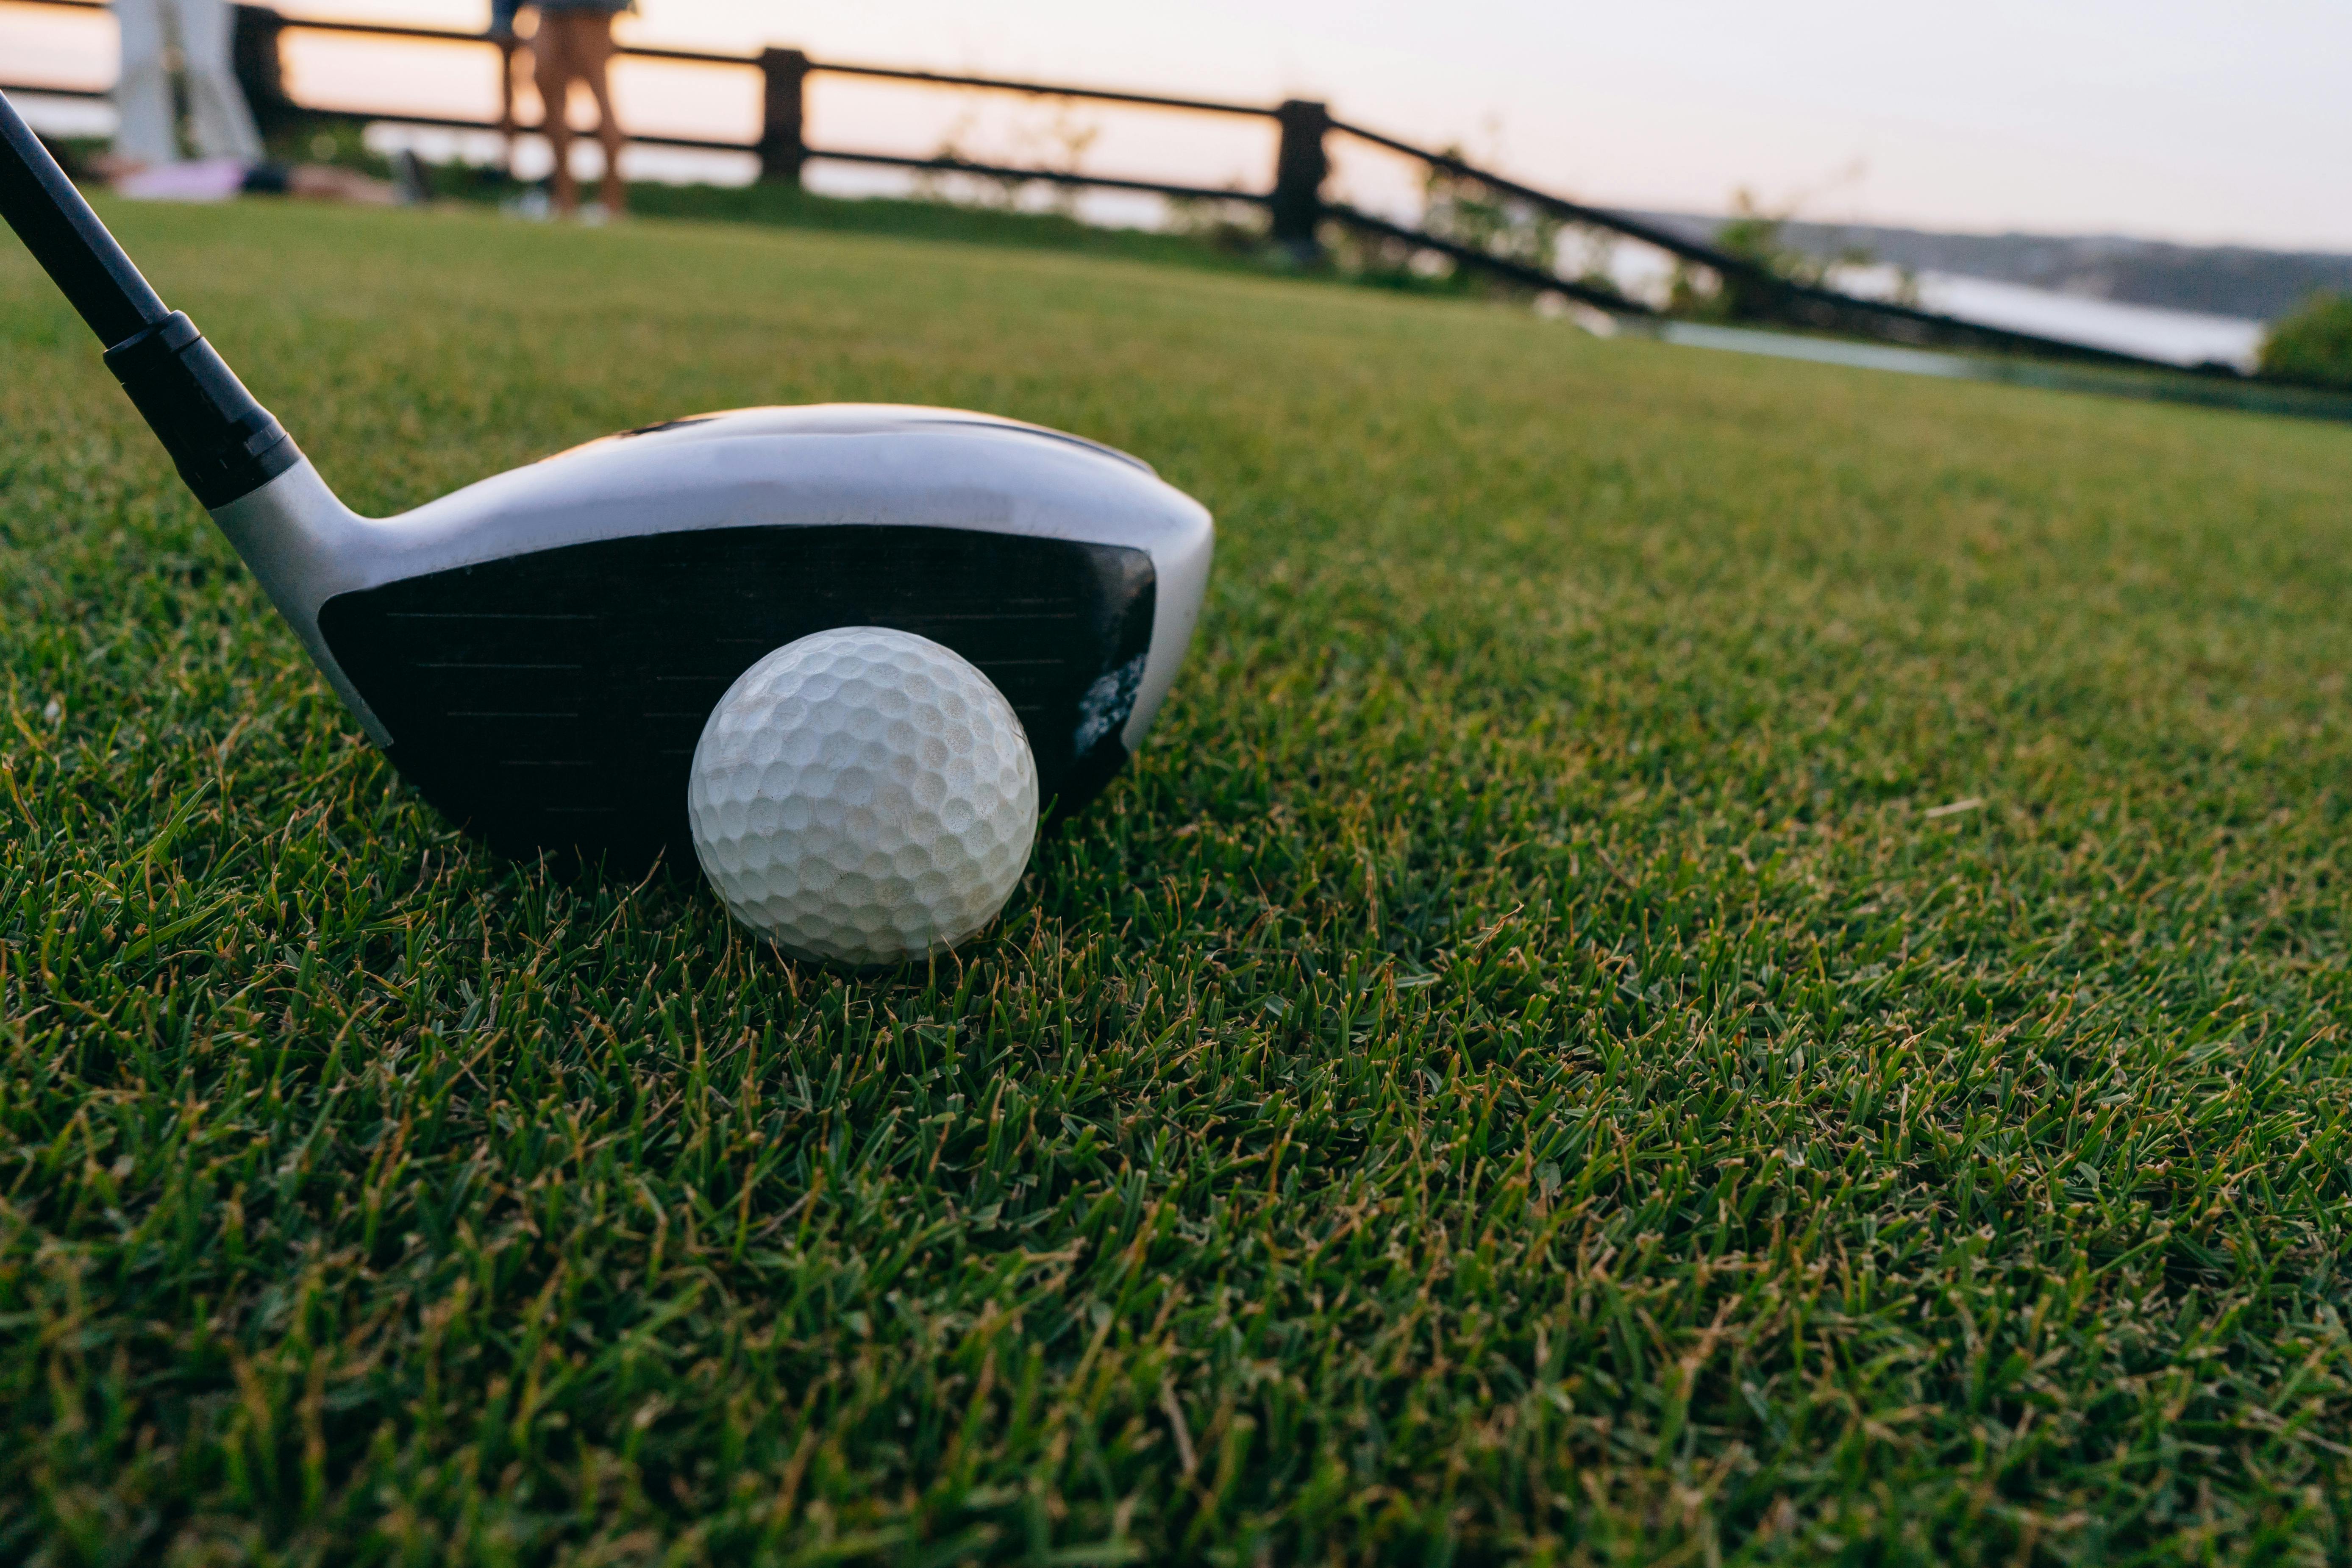 a close up shot of a golf ball and a golf club